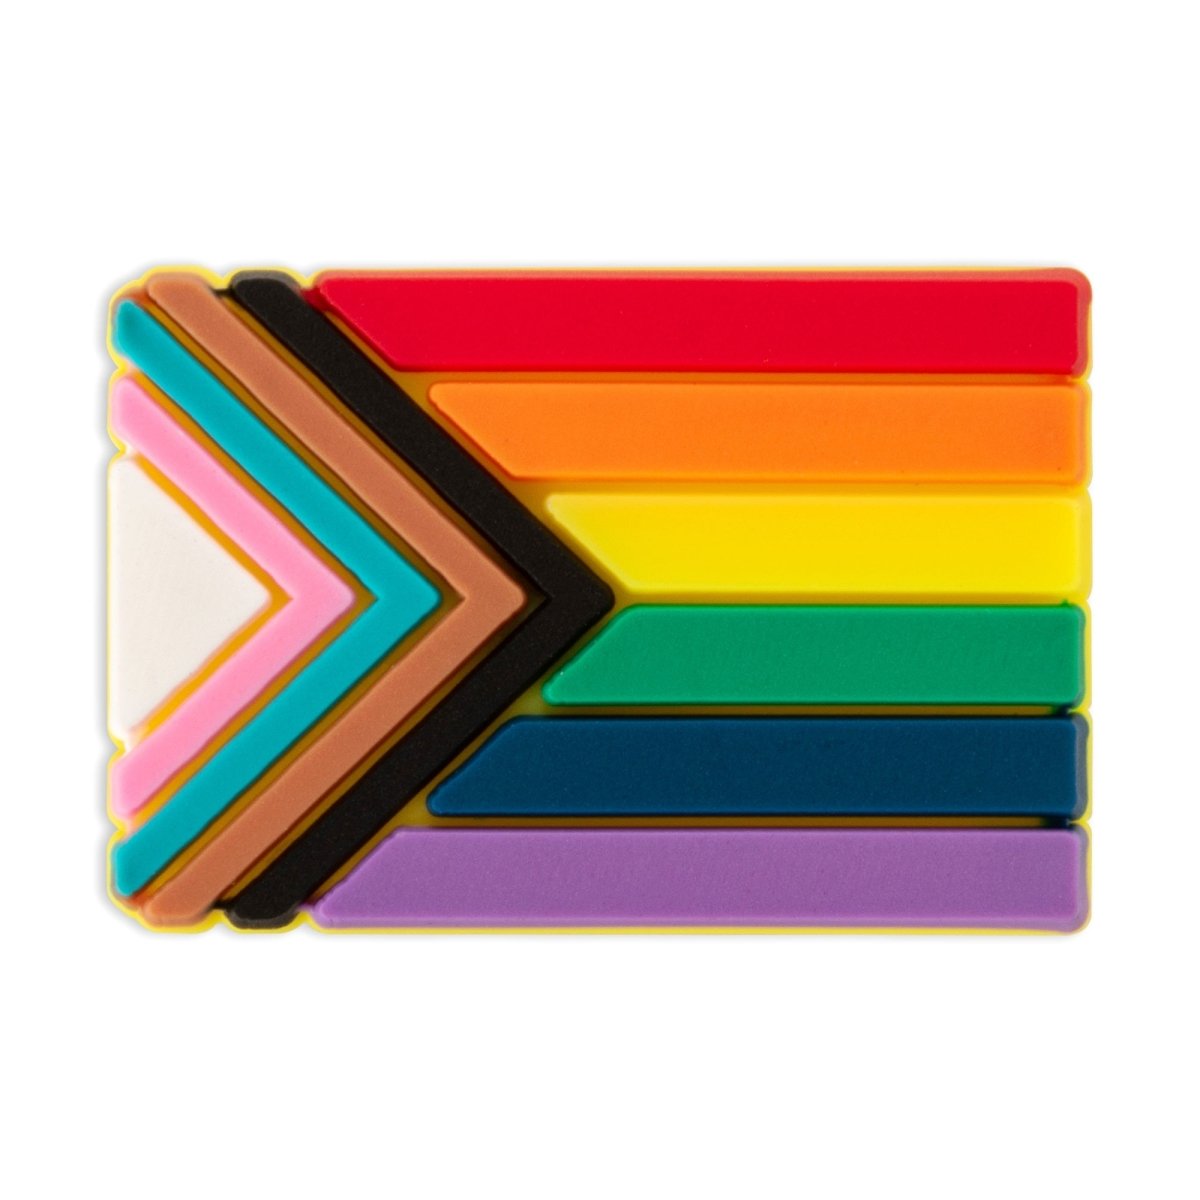 Daniel Quasar Progress Pride Flag Silicone Flag Pins - Fundraising For A Cause